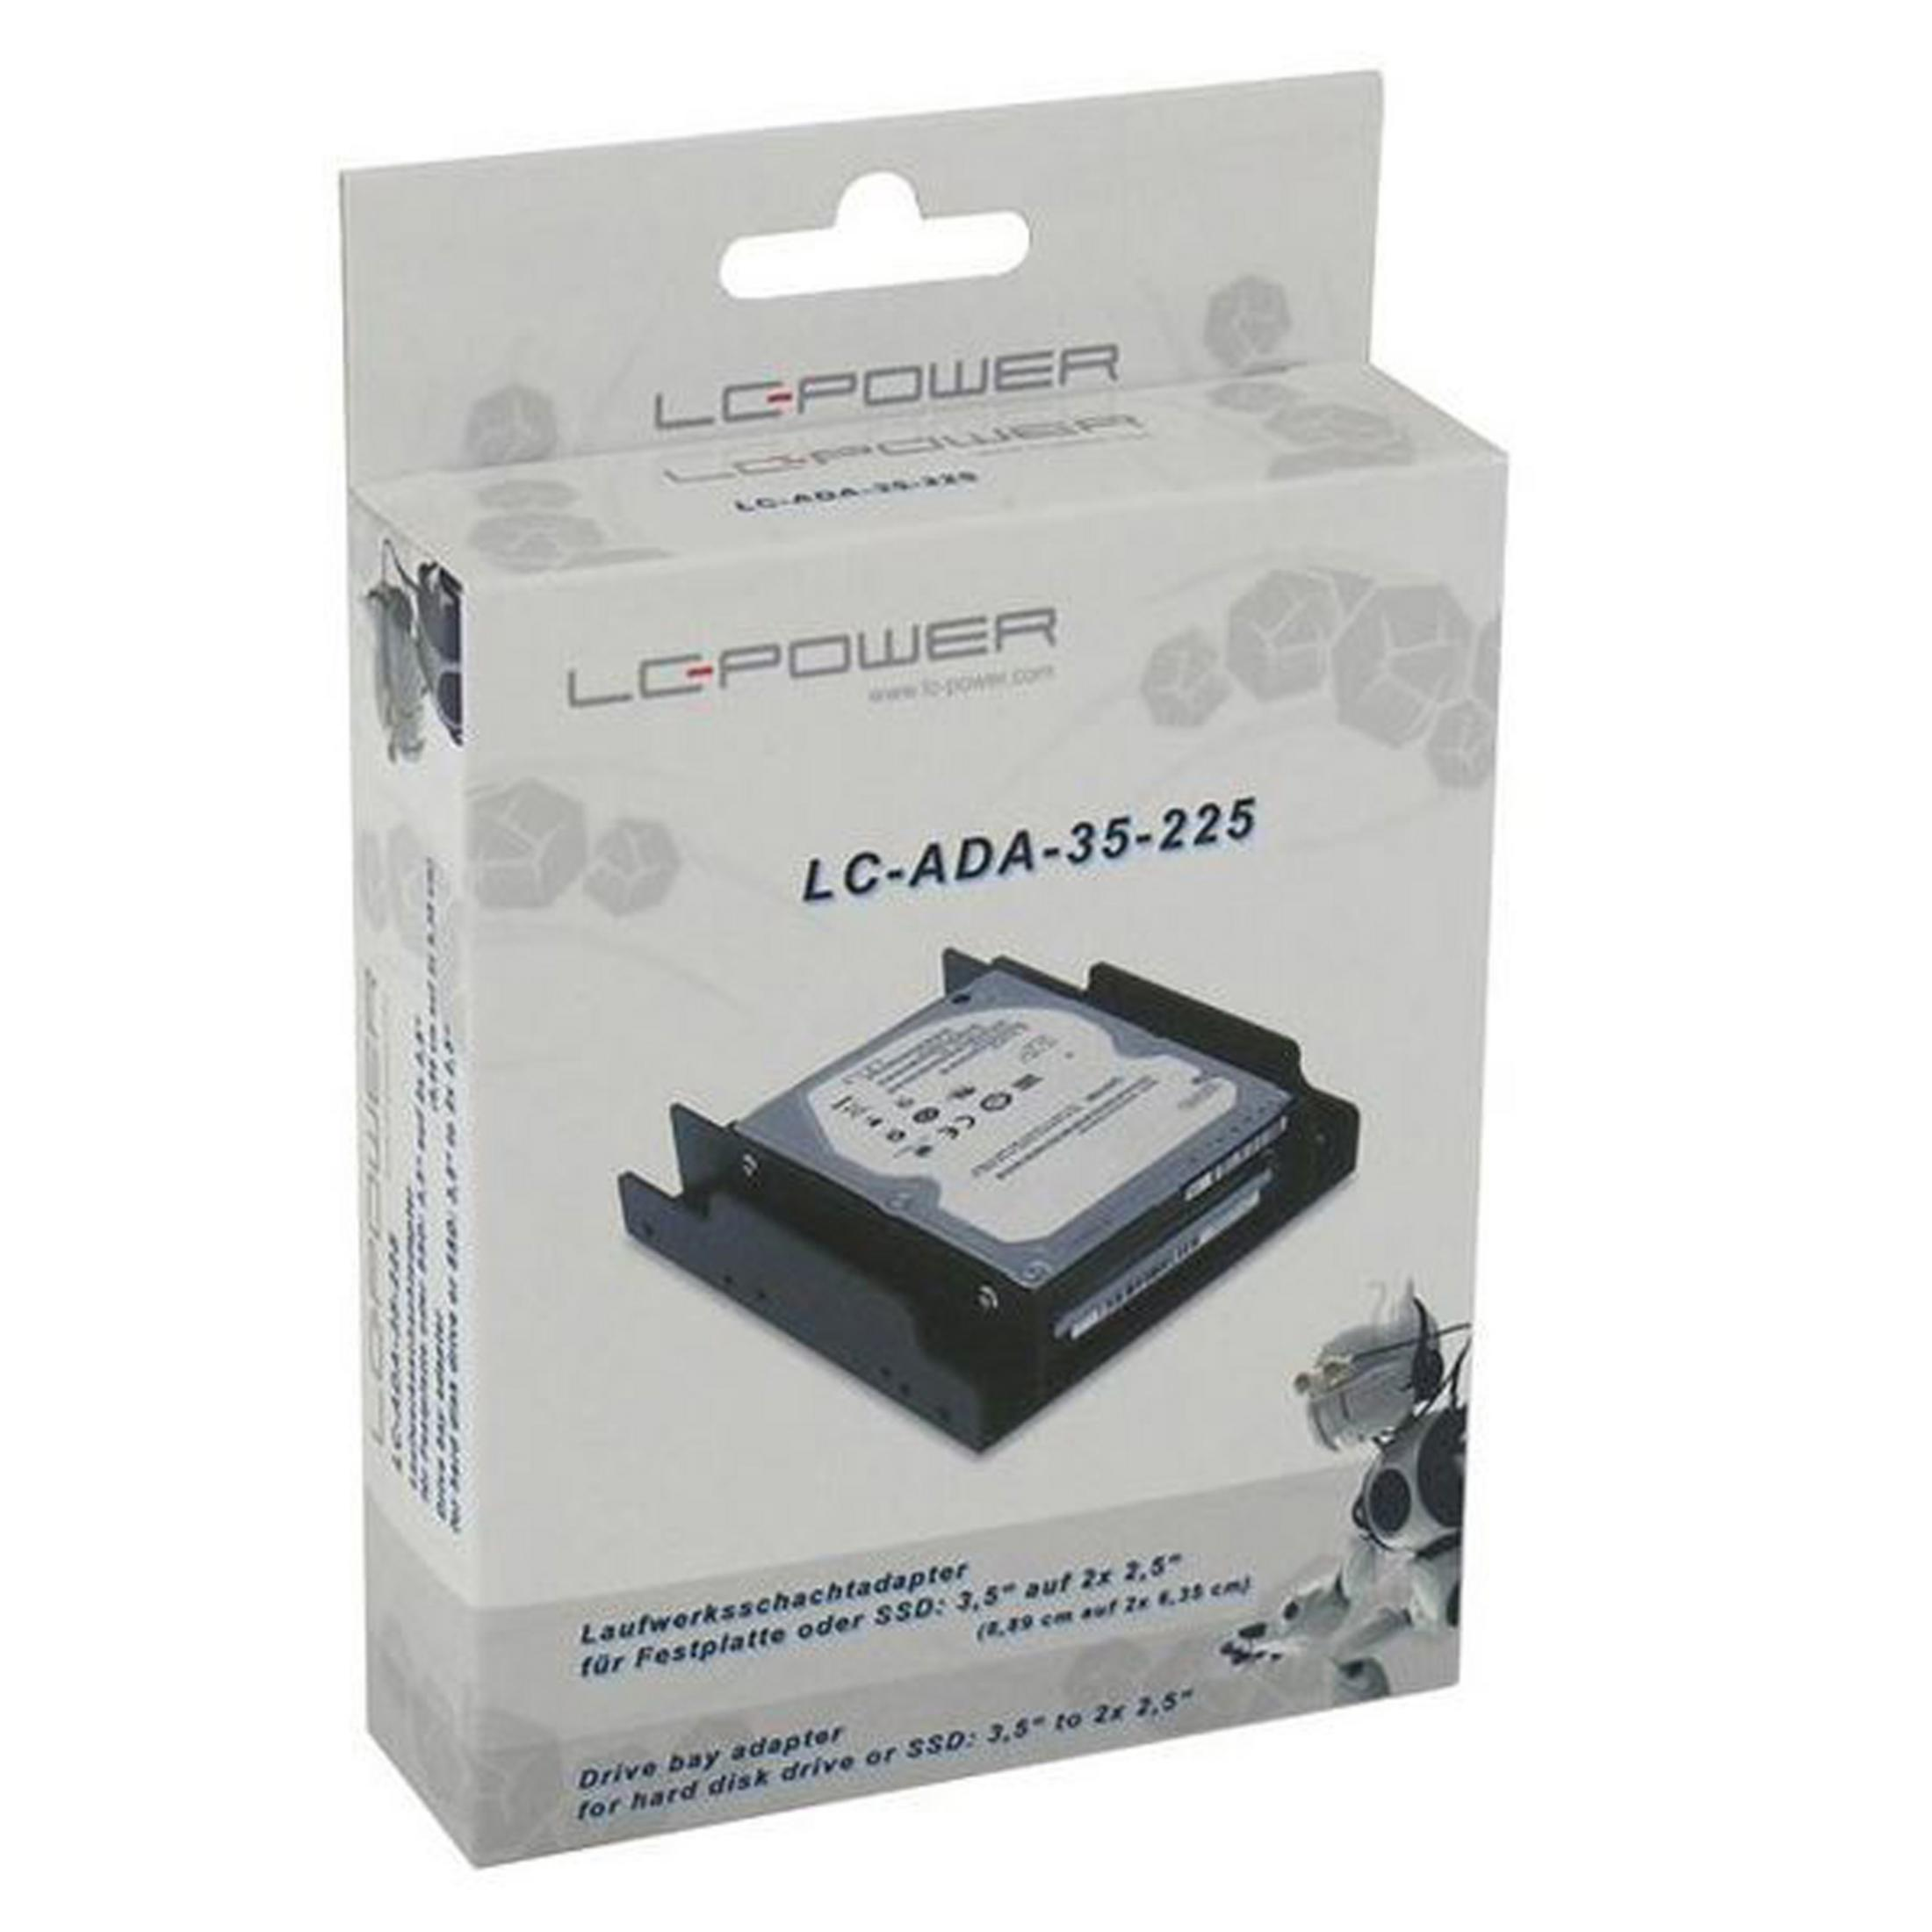 Festplattenadapter LC-ADA-35-225 EINBAURAHMEN, POWER LC